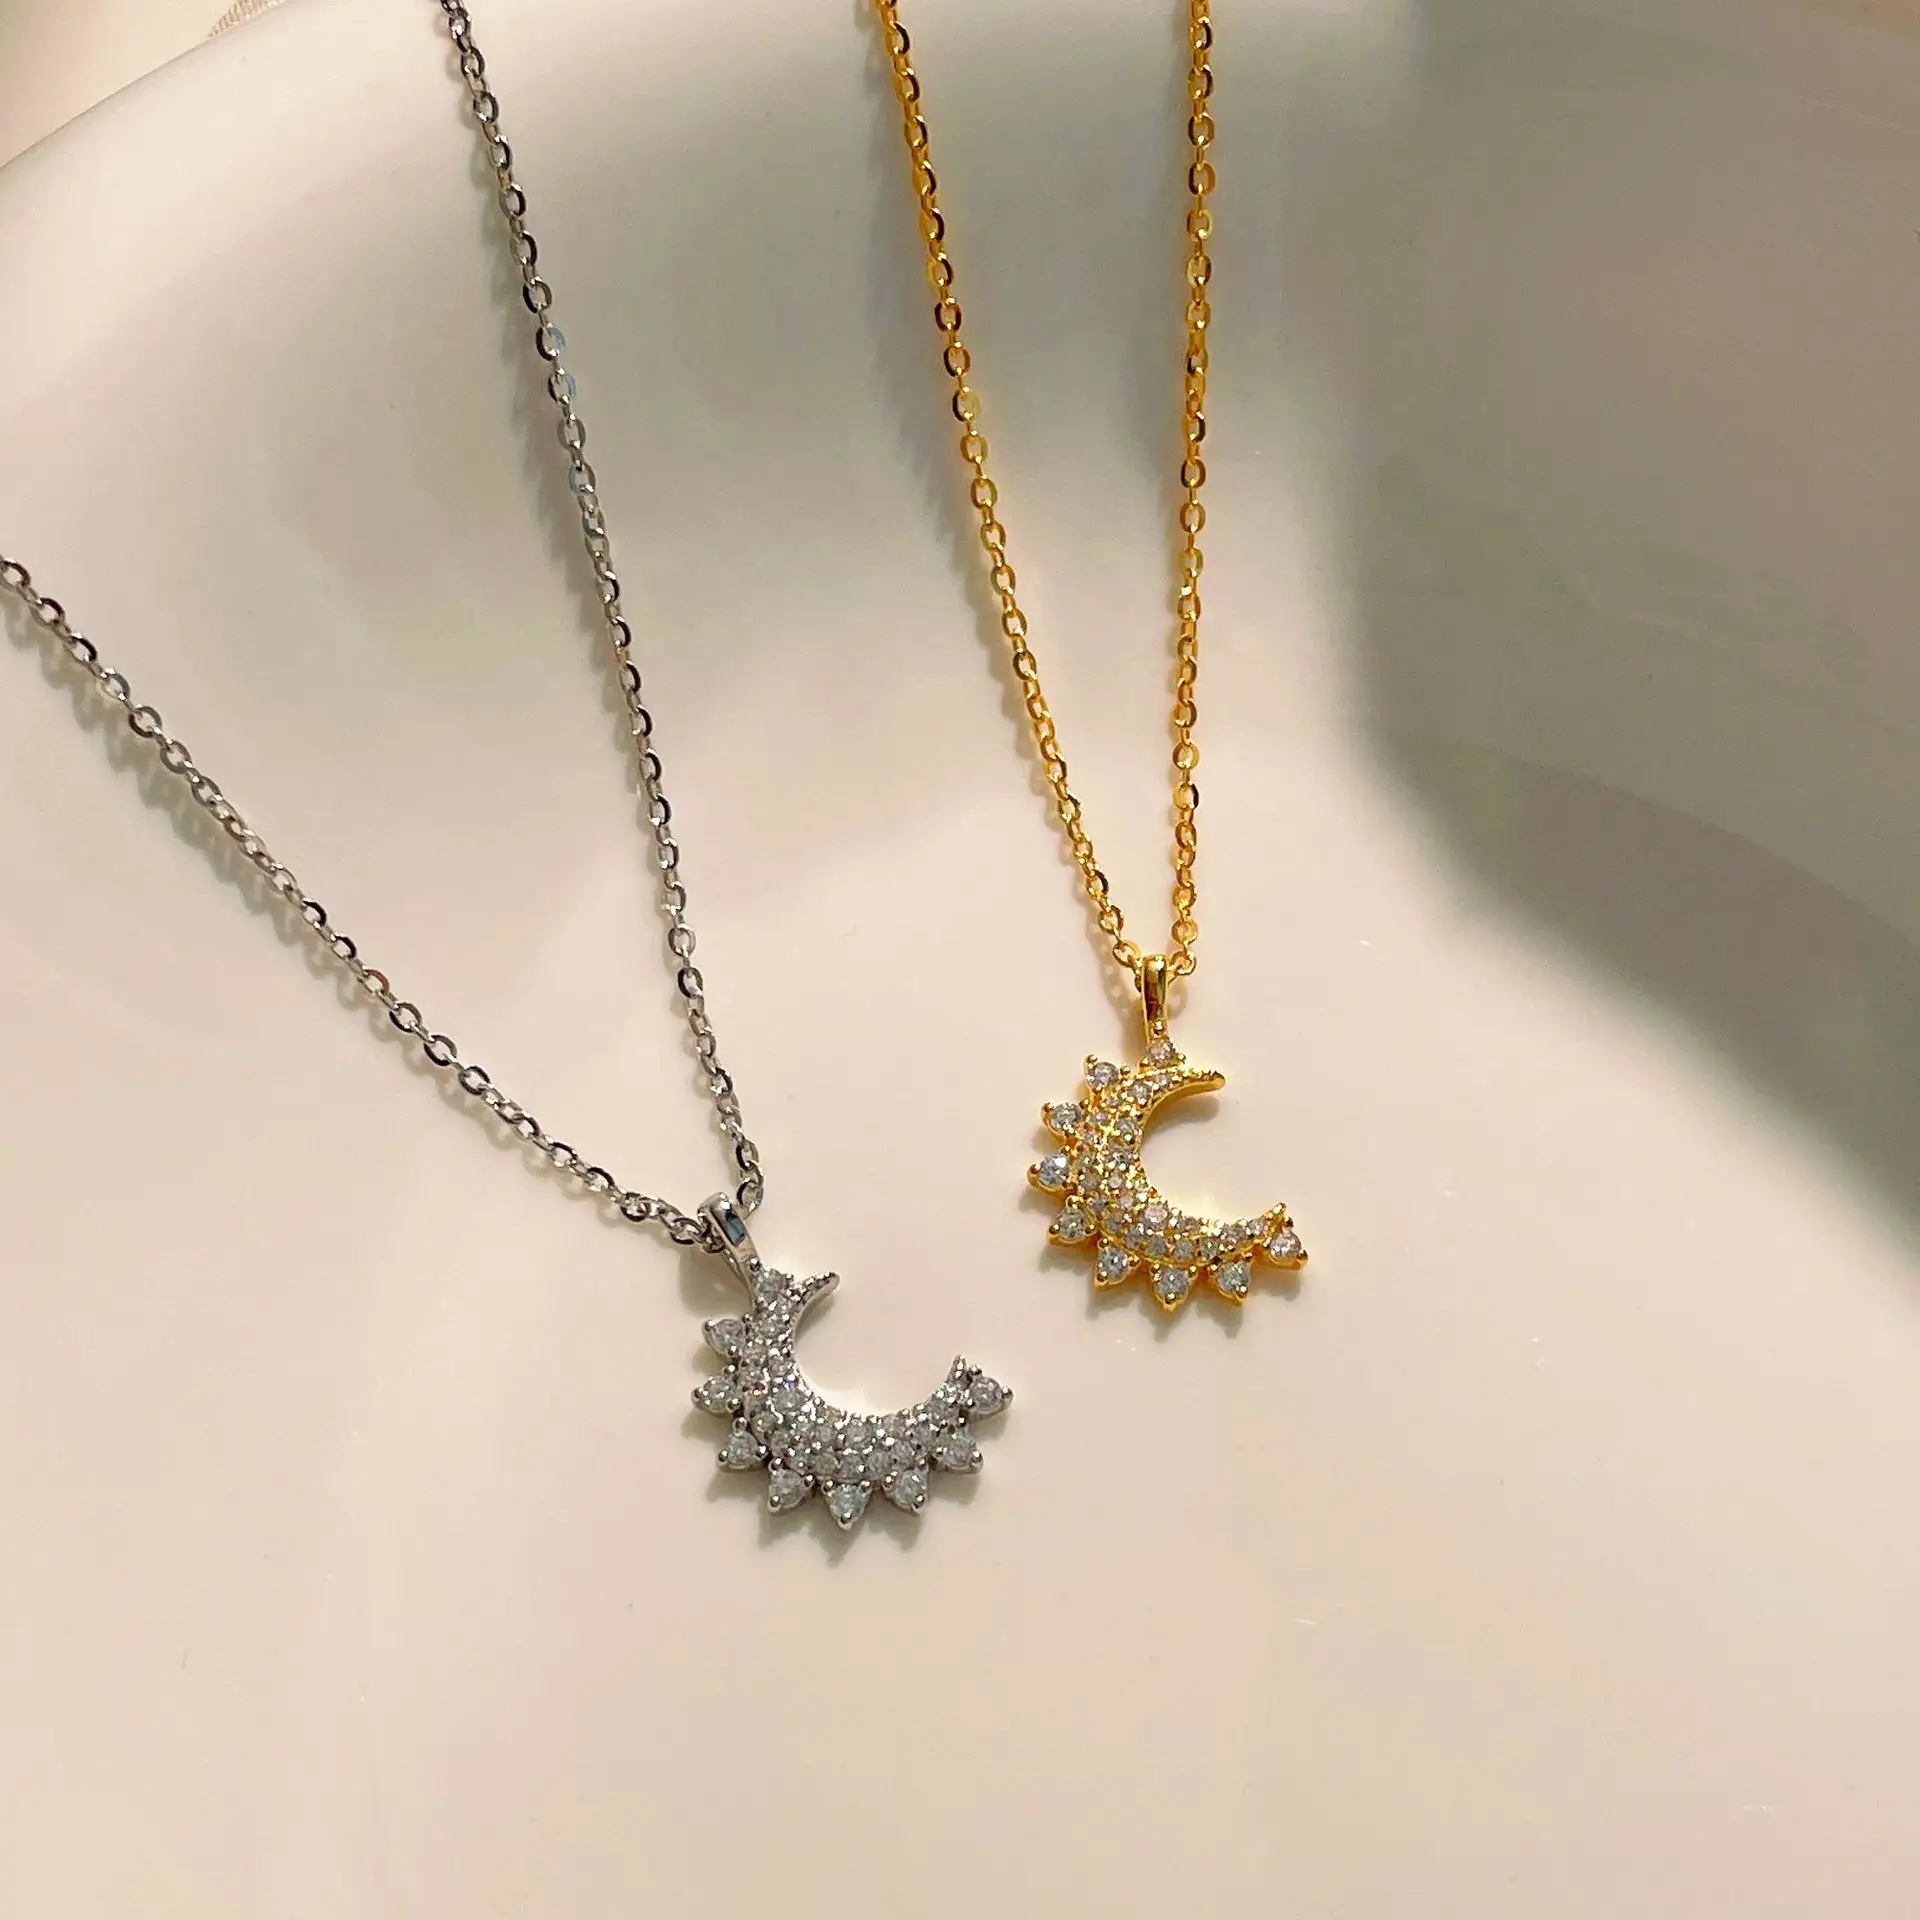 New Minimalist Designer S925 Sterling Silver Zirconia Moon Pendant Charm Necklace Women Girl Fine Jewelry DQ1536N